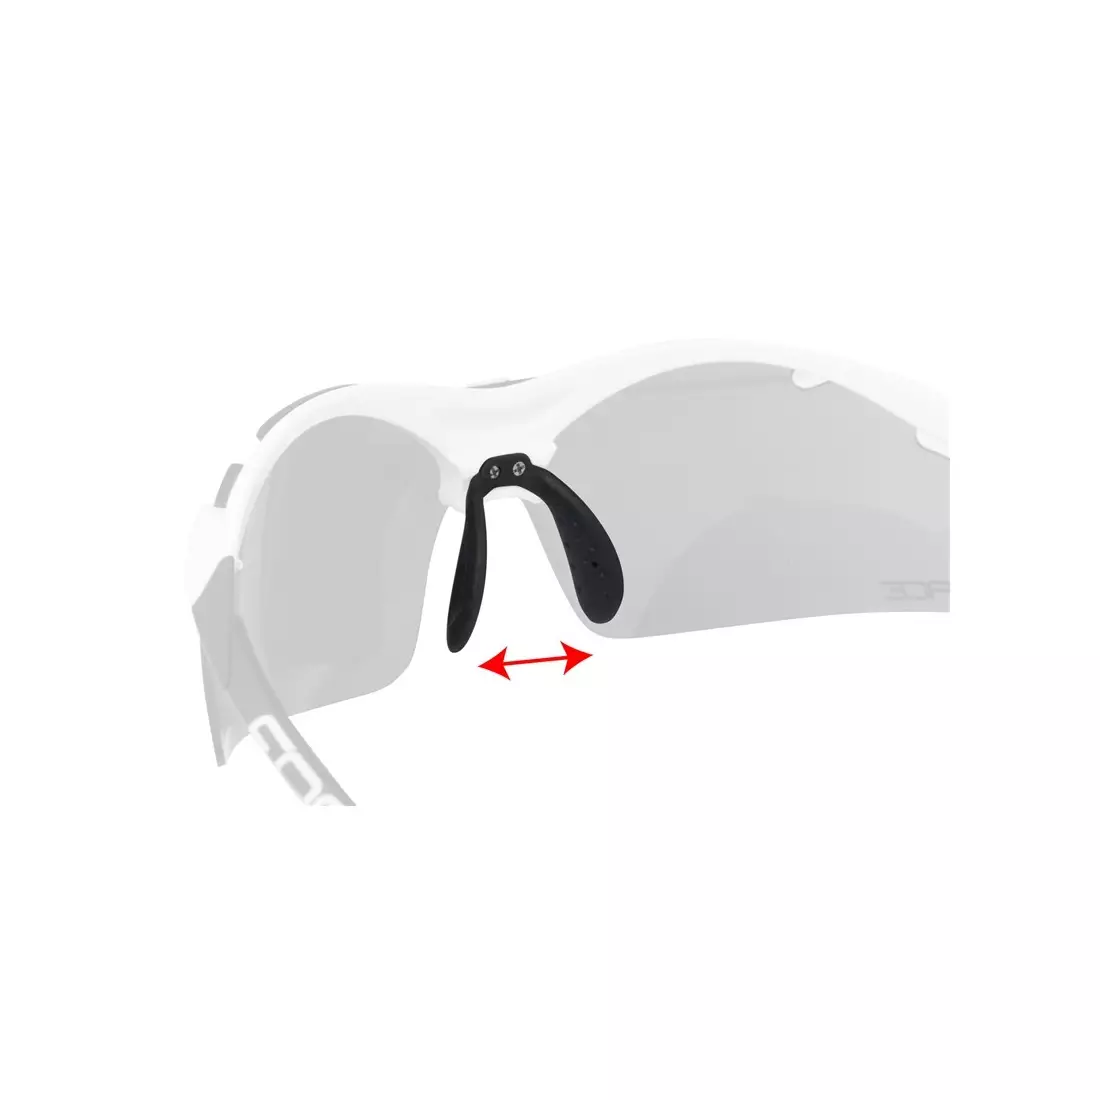 FORCE DUKE glasses with interchangeable lenses, white and black 91021